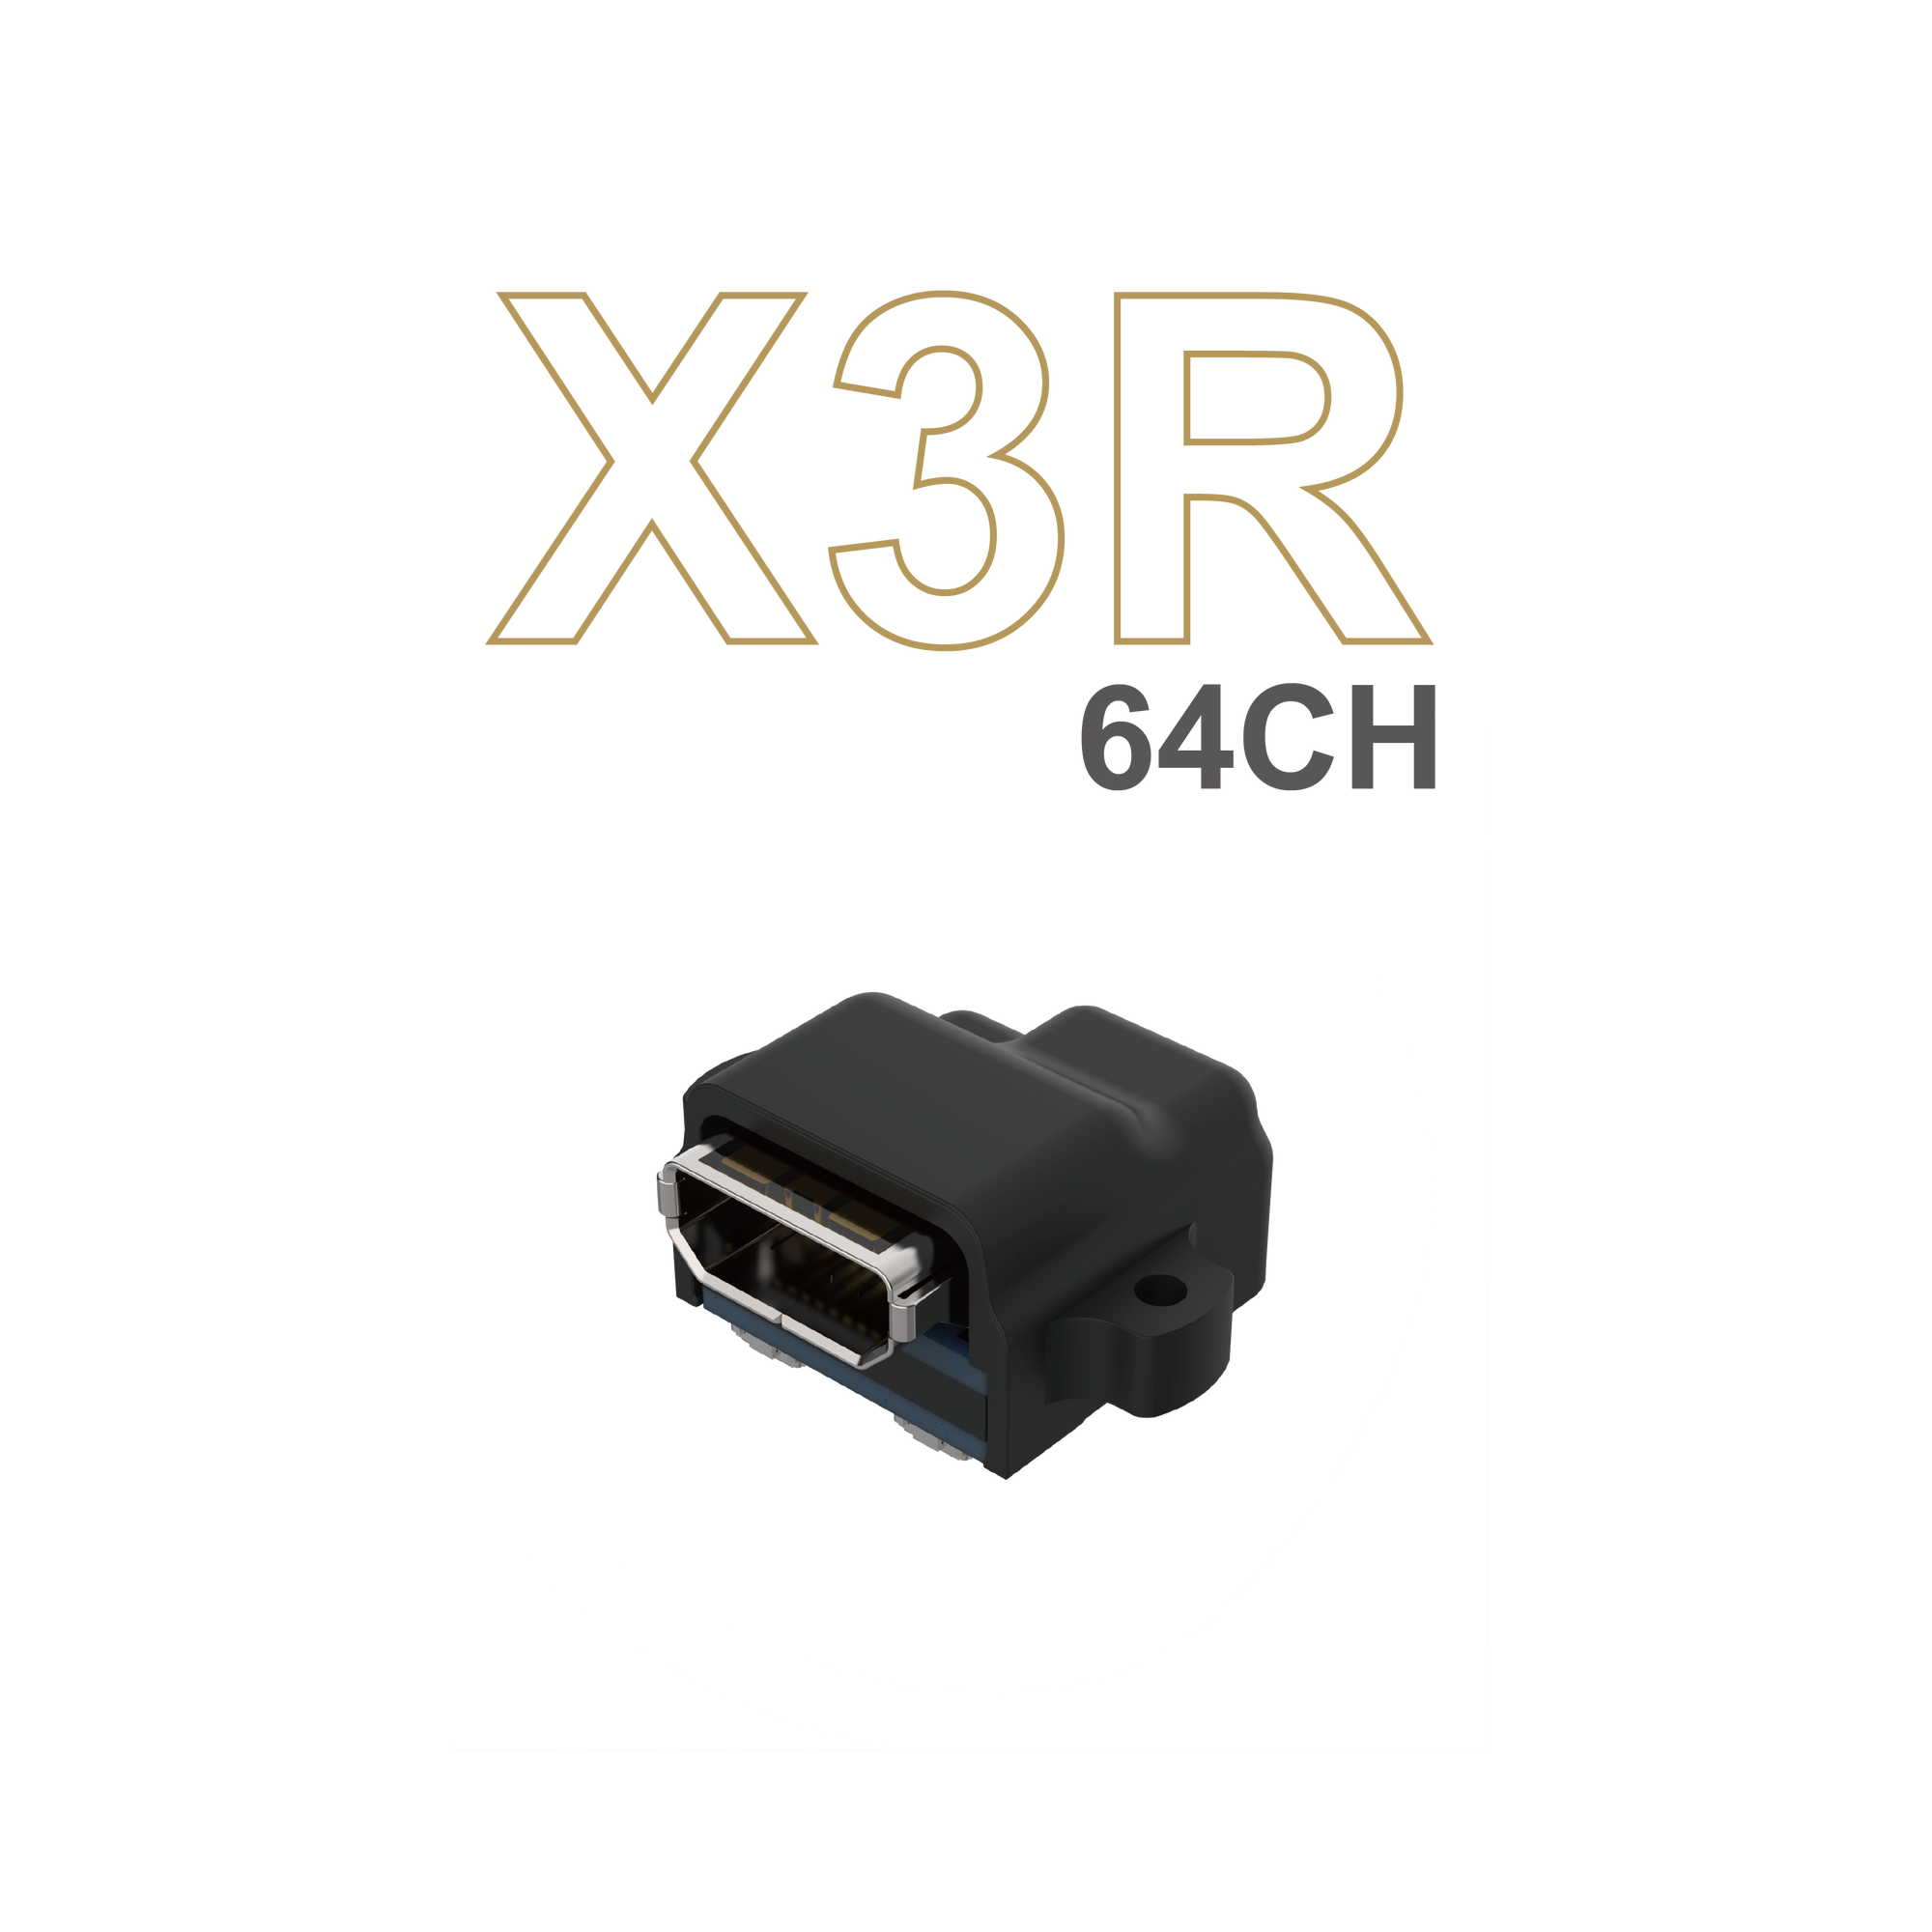 X3R64 64ch Recording X-Headstage